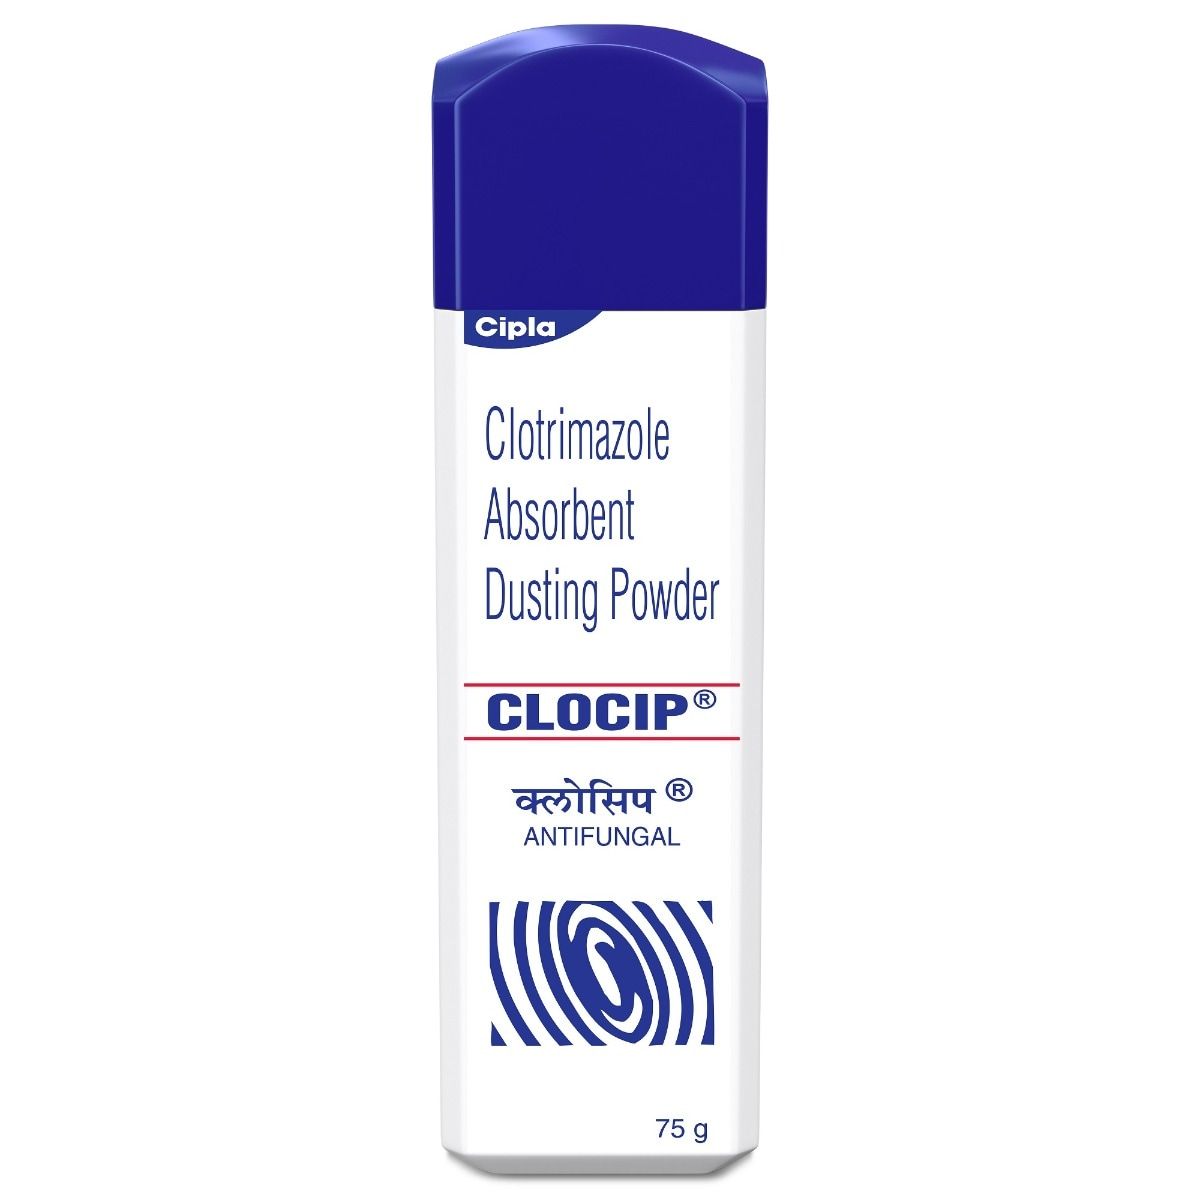 Buy Clocip Dusting Powder 75 gm Online